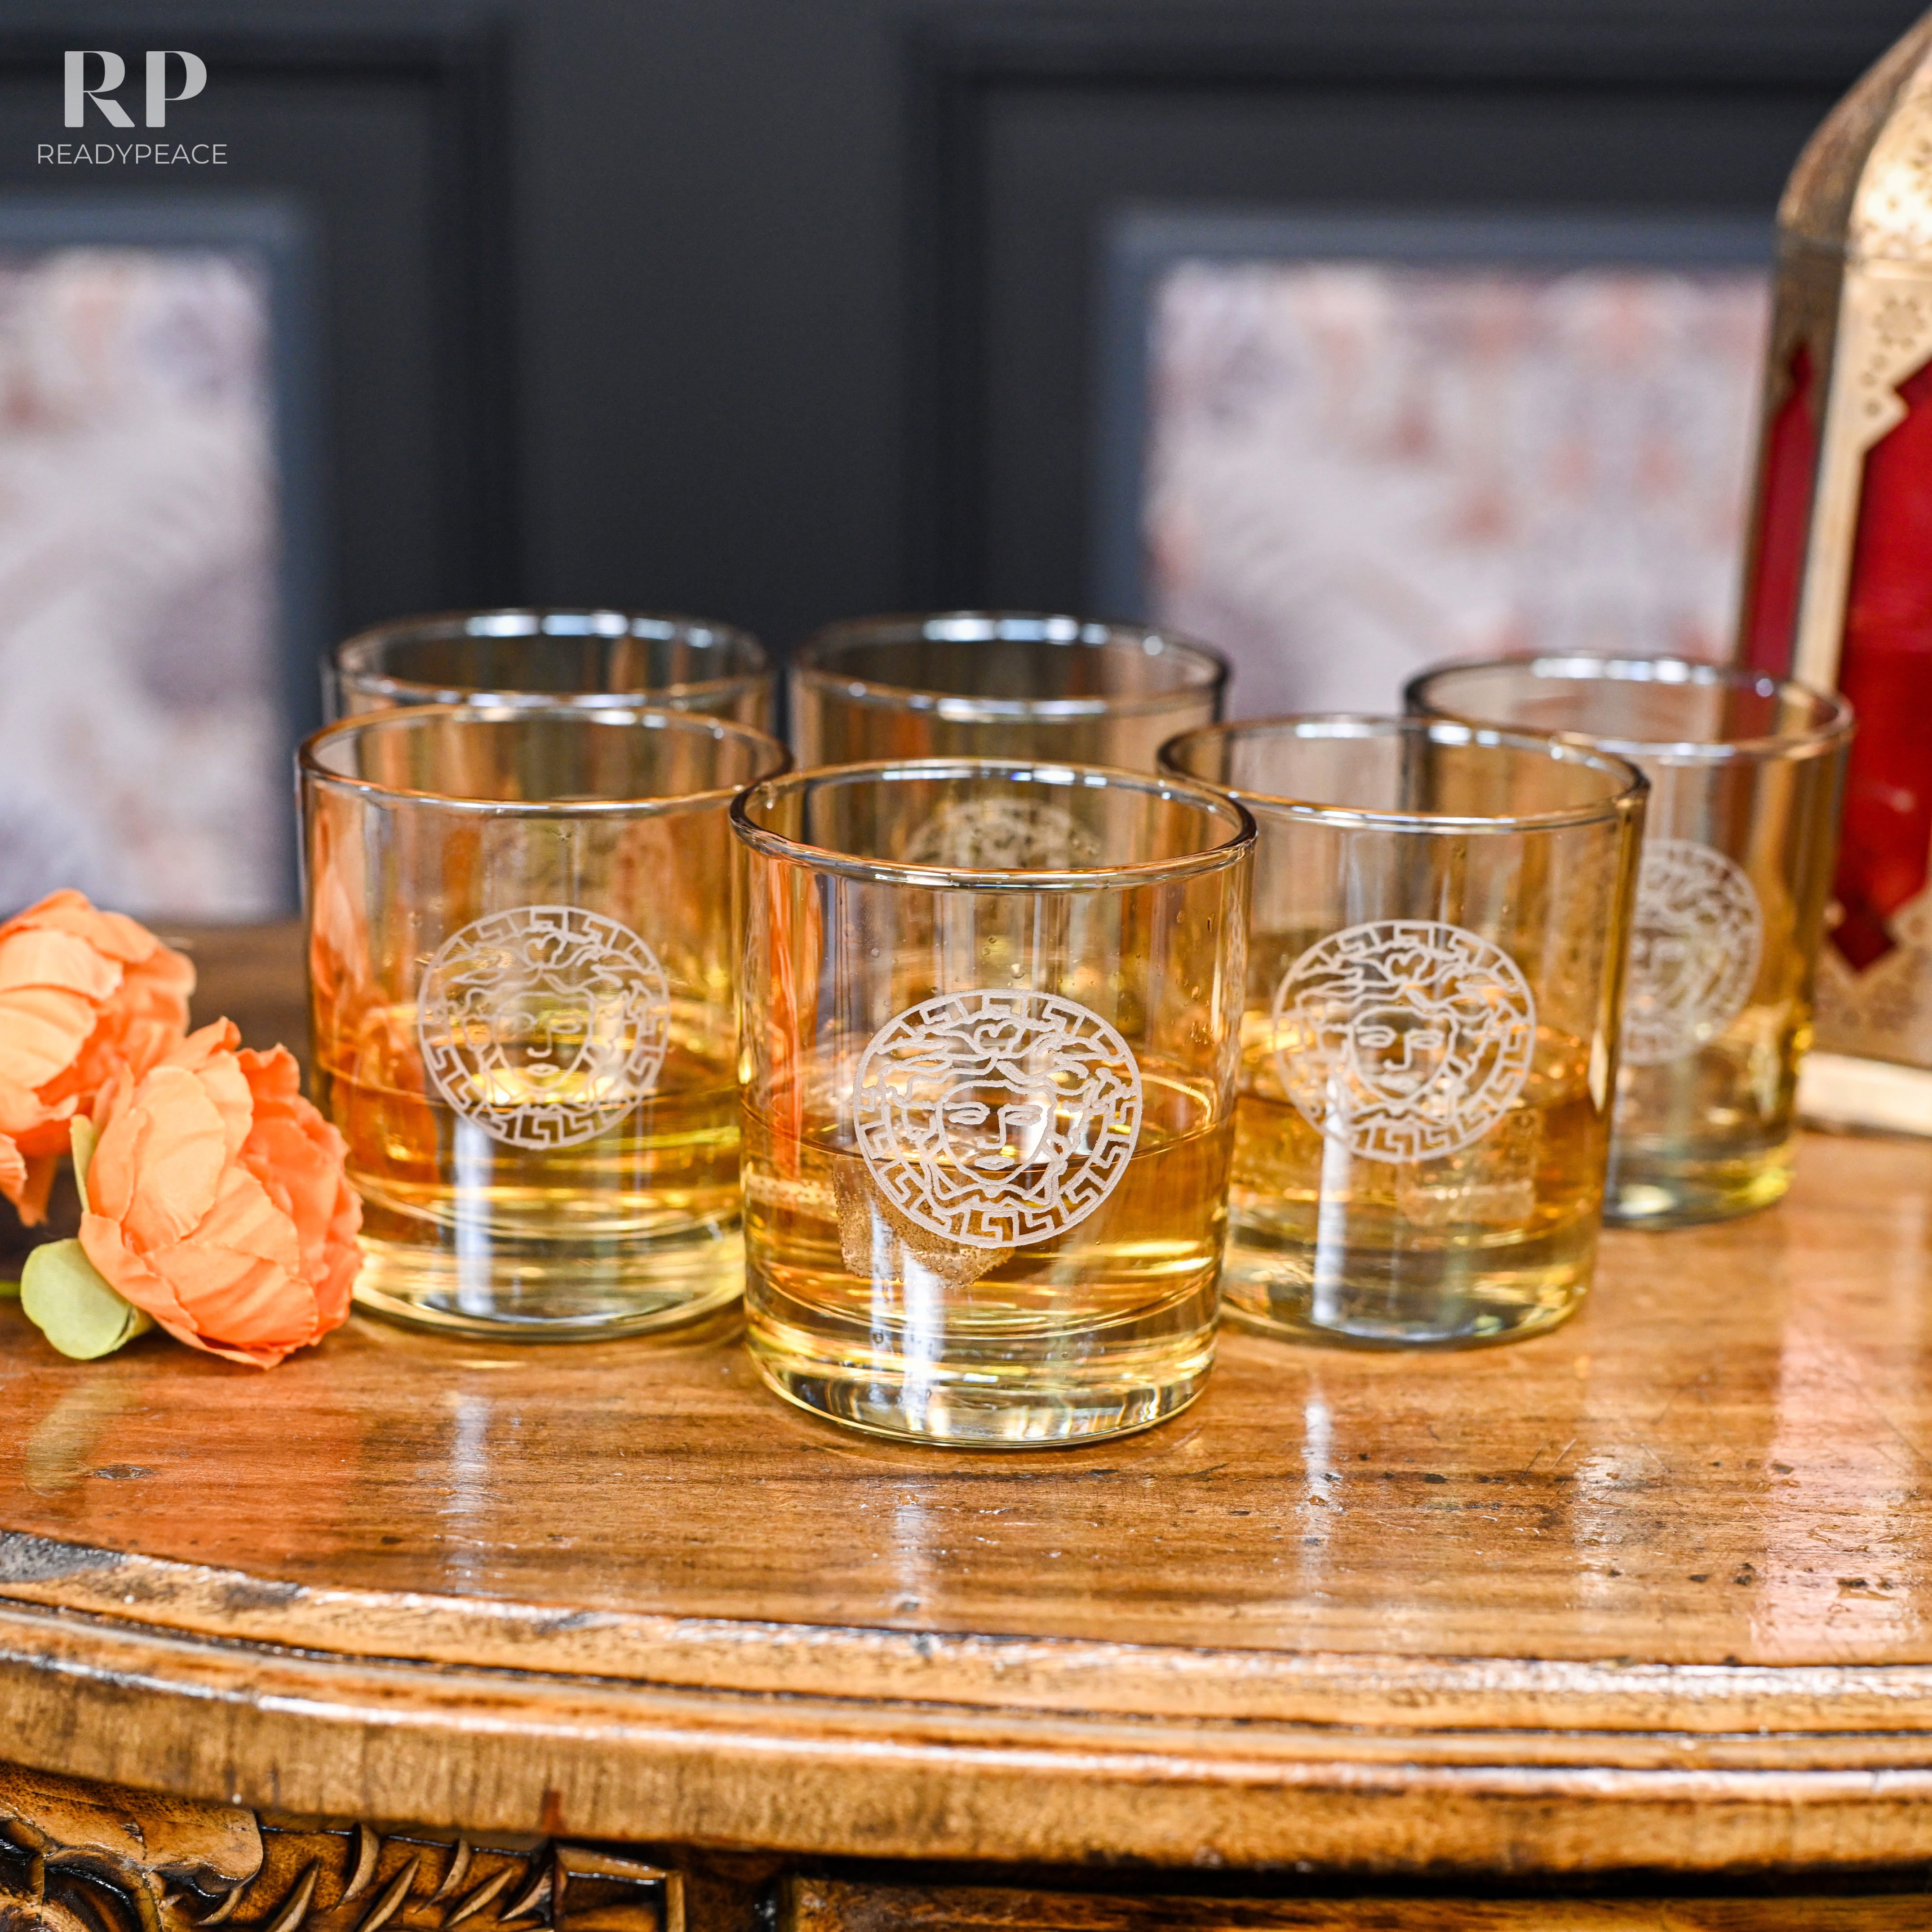 Elite Rock Versace Crystal Whiskey Glasses - Set of 6 (Amber)